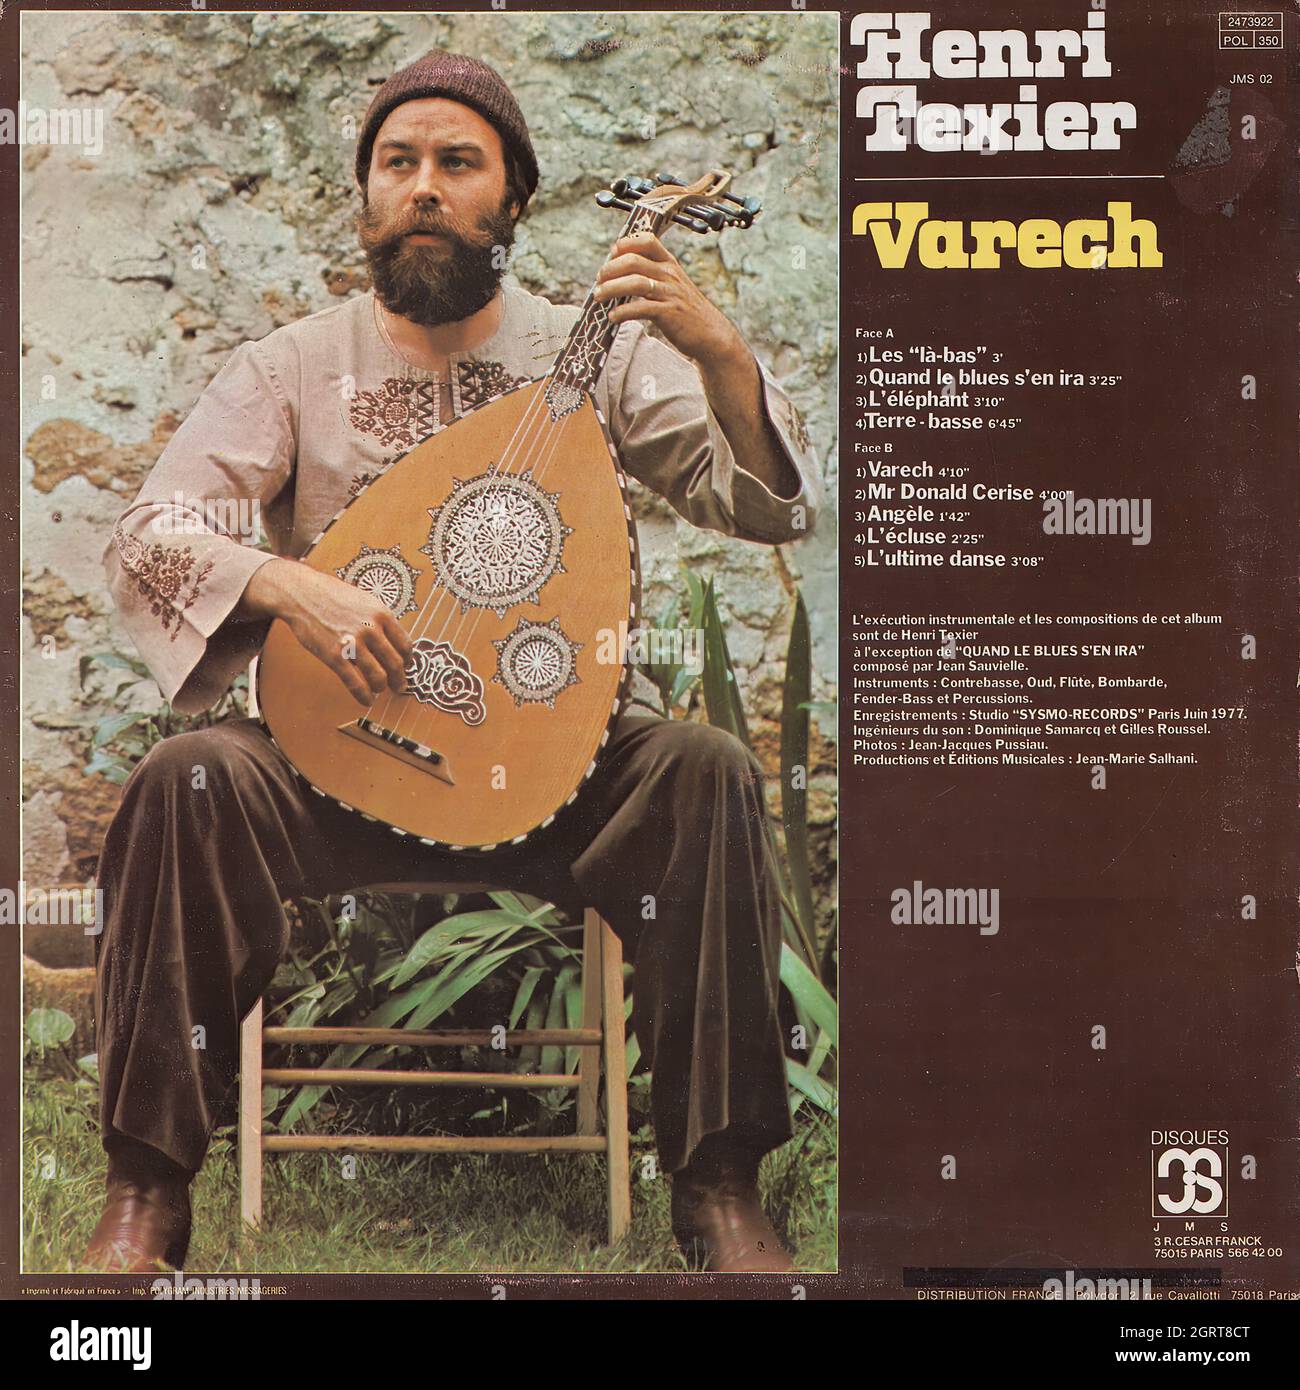 Henri Texier - Varech (back cover) - Vintage Vinyl Record Cover Stock Photo